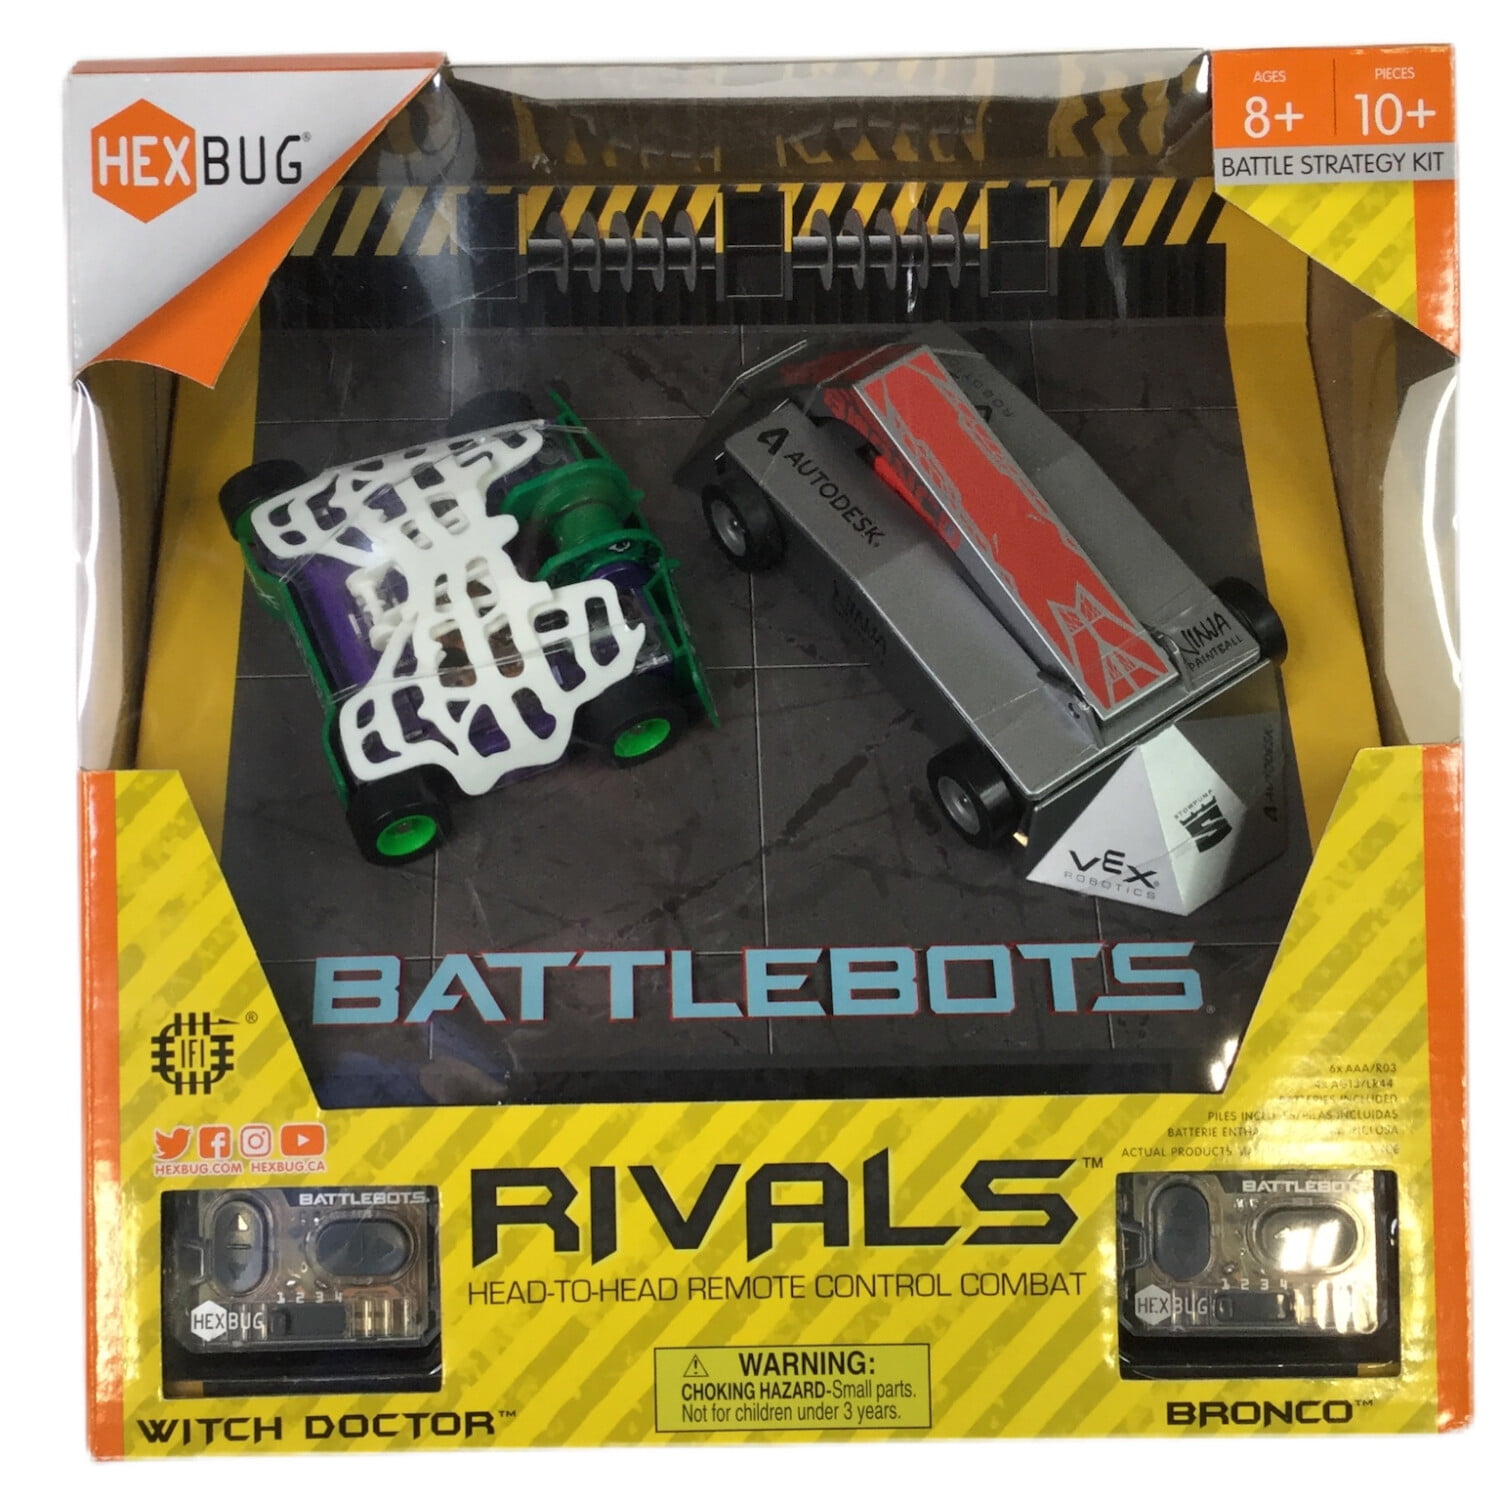 HEXBUG Battlebots Build Your Own Battlebox Battle Strategy Kit for sale online 